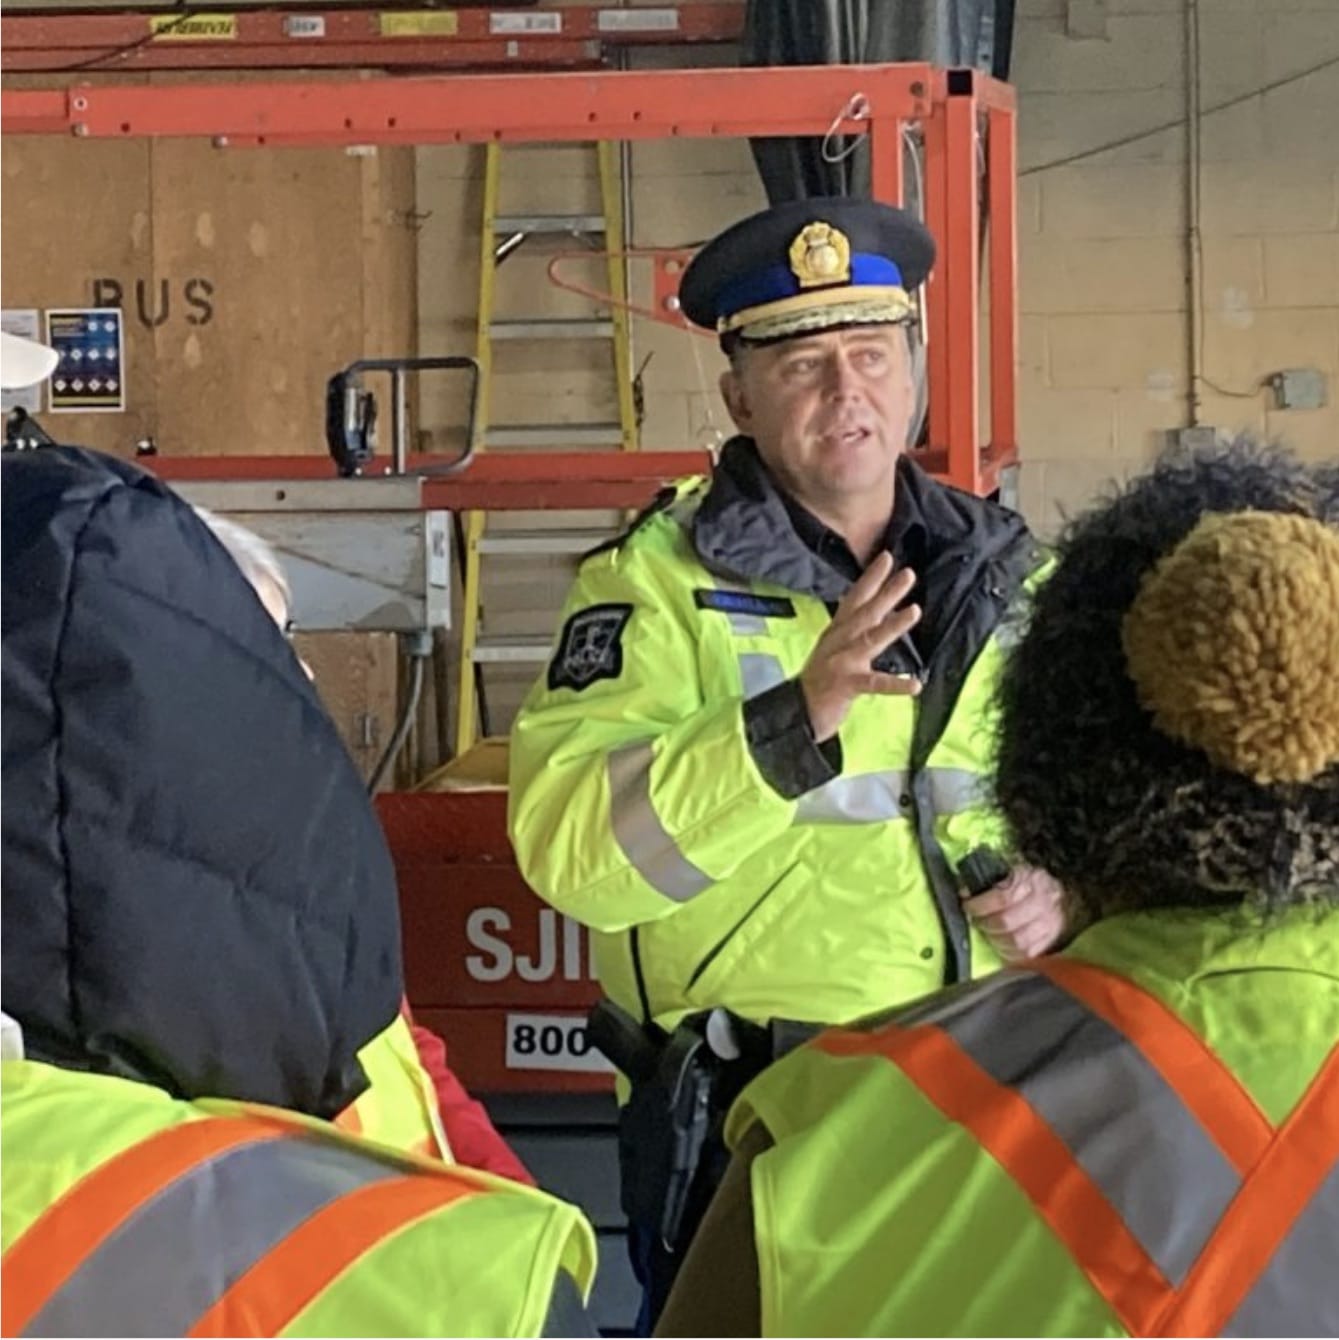 A police officer speaks to people in the Macdonald Bridge garage.